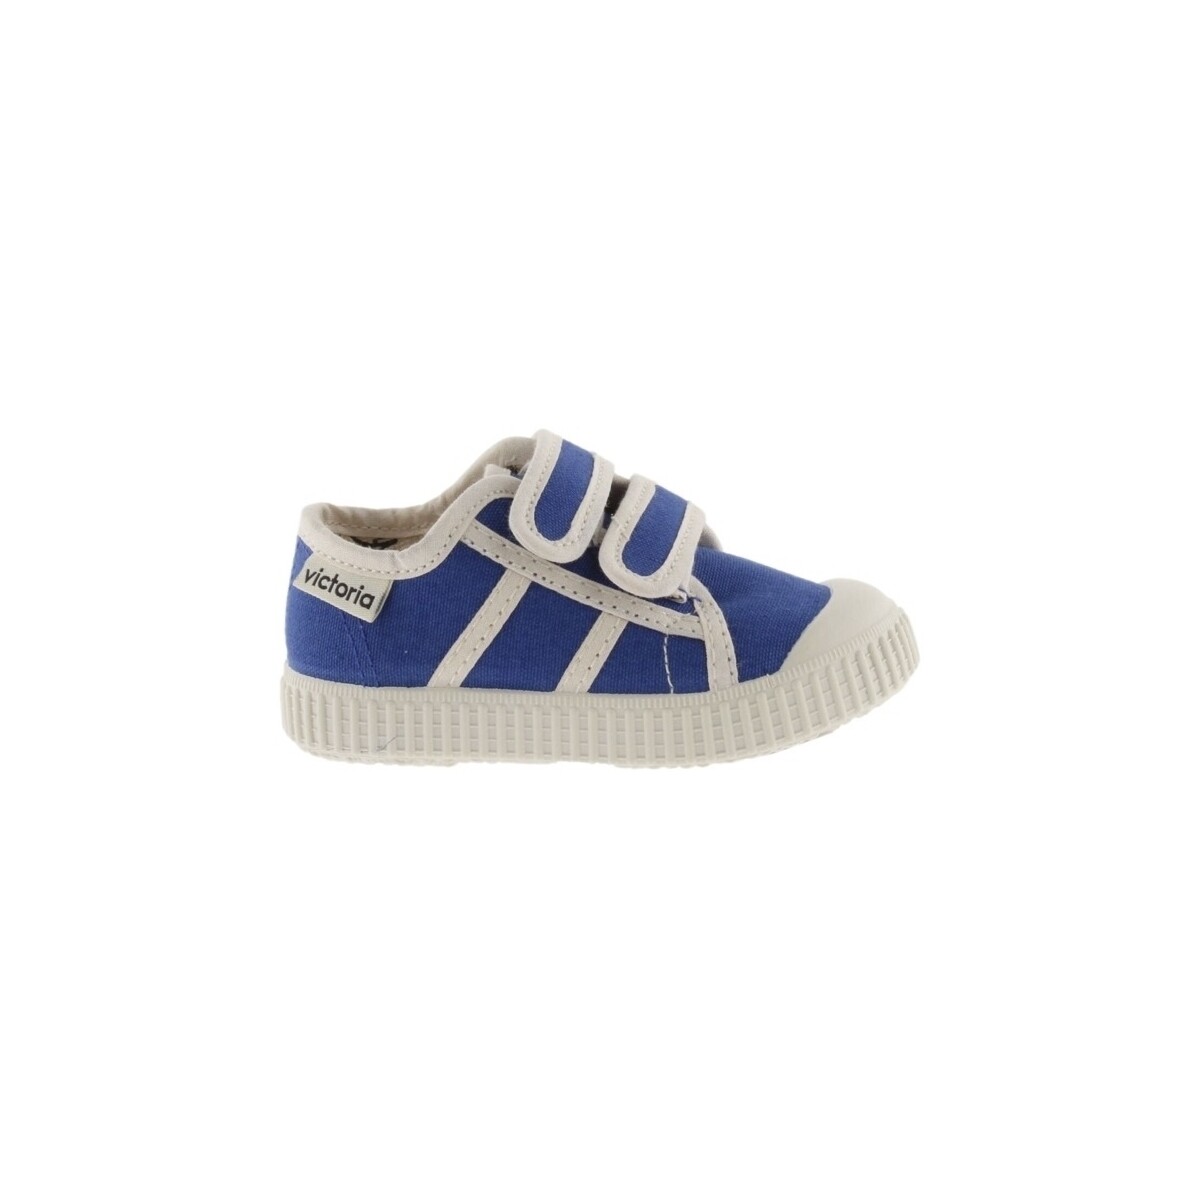 Victoria  Sneakers Victoria Baby 366156 - Azul